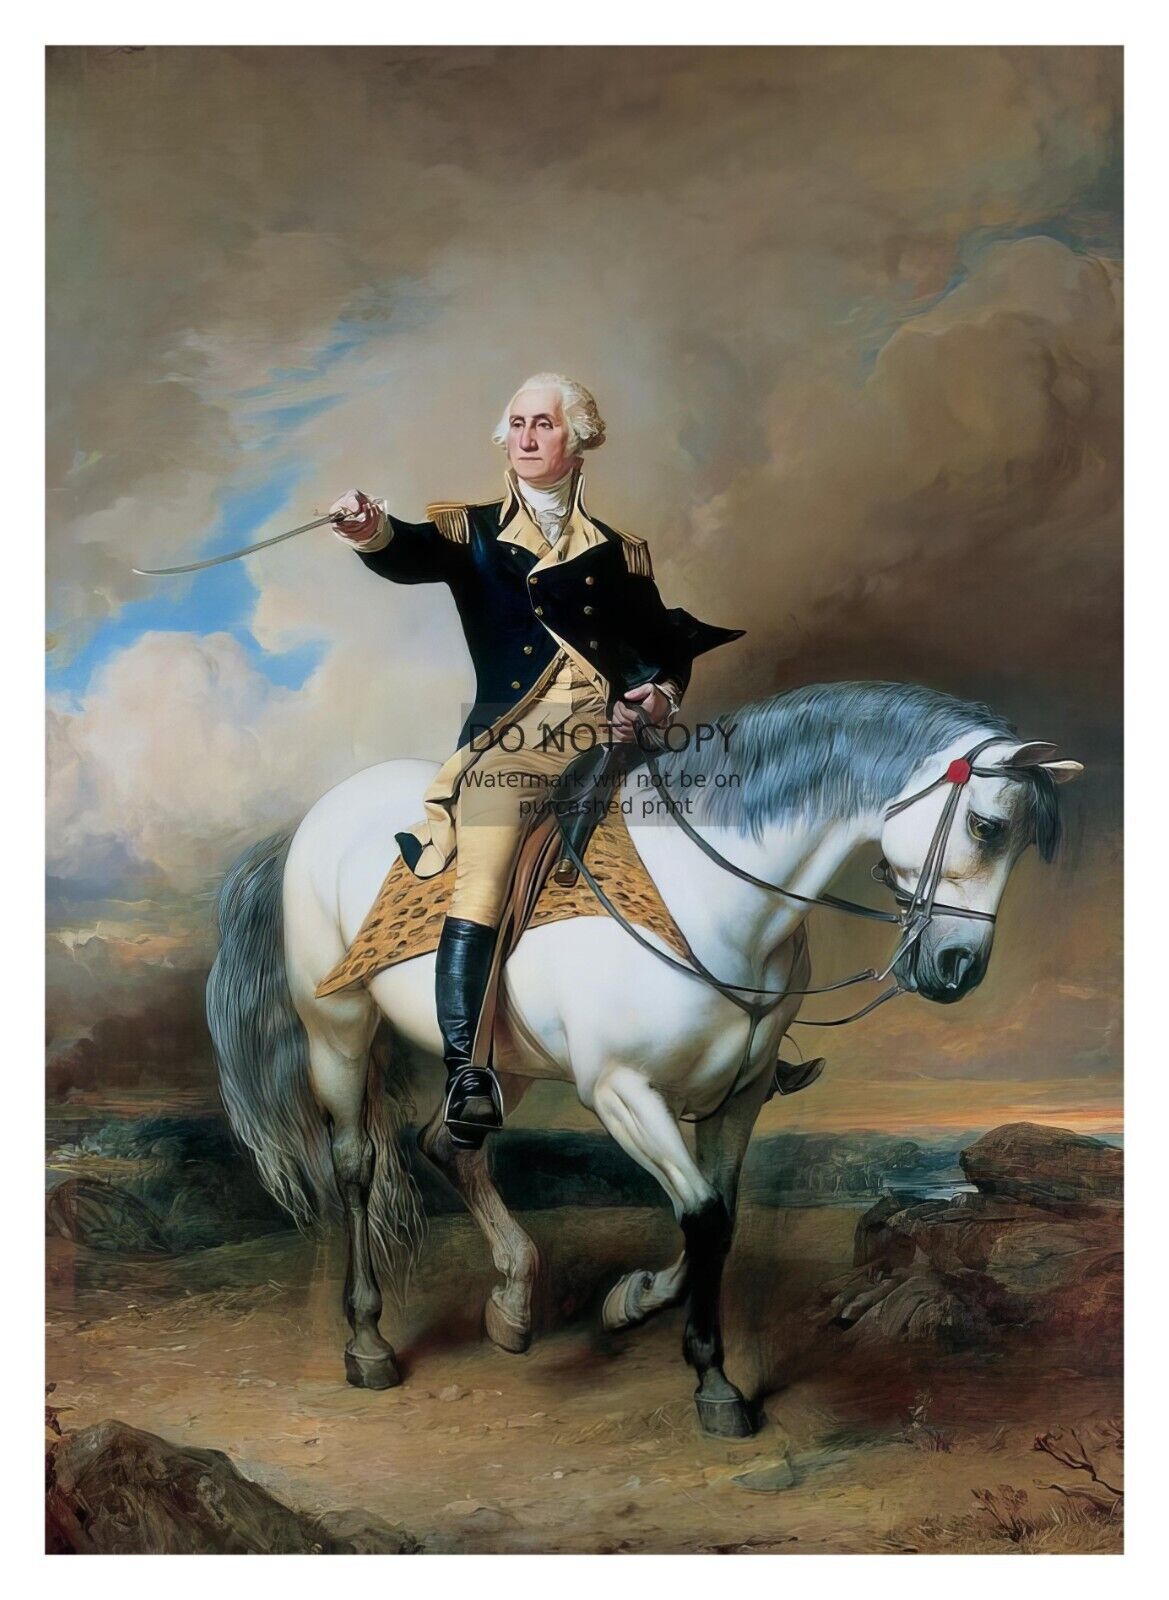 PRESIDENT GEORGE WASHINGTON RIDING HORSE WITH SWORD PAINTING 5X7 PHOTO